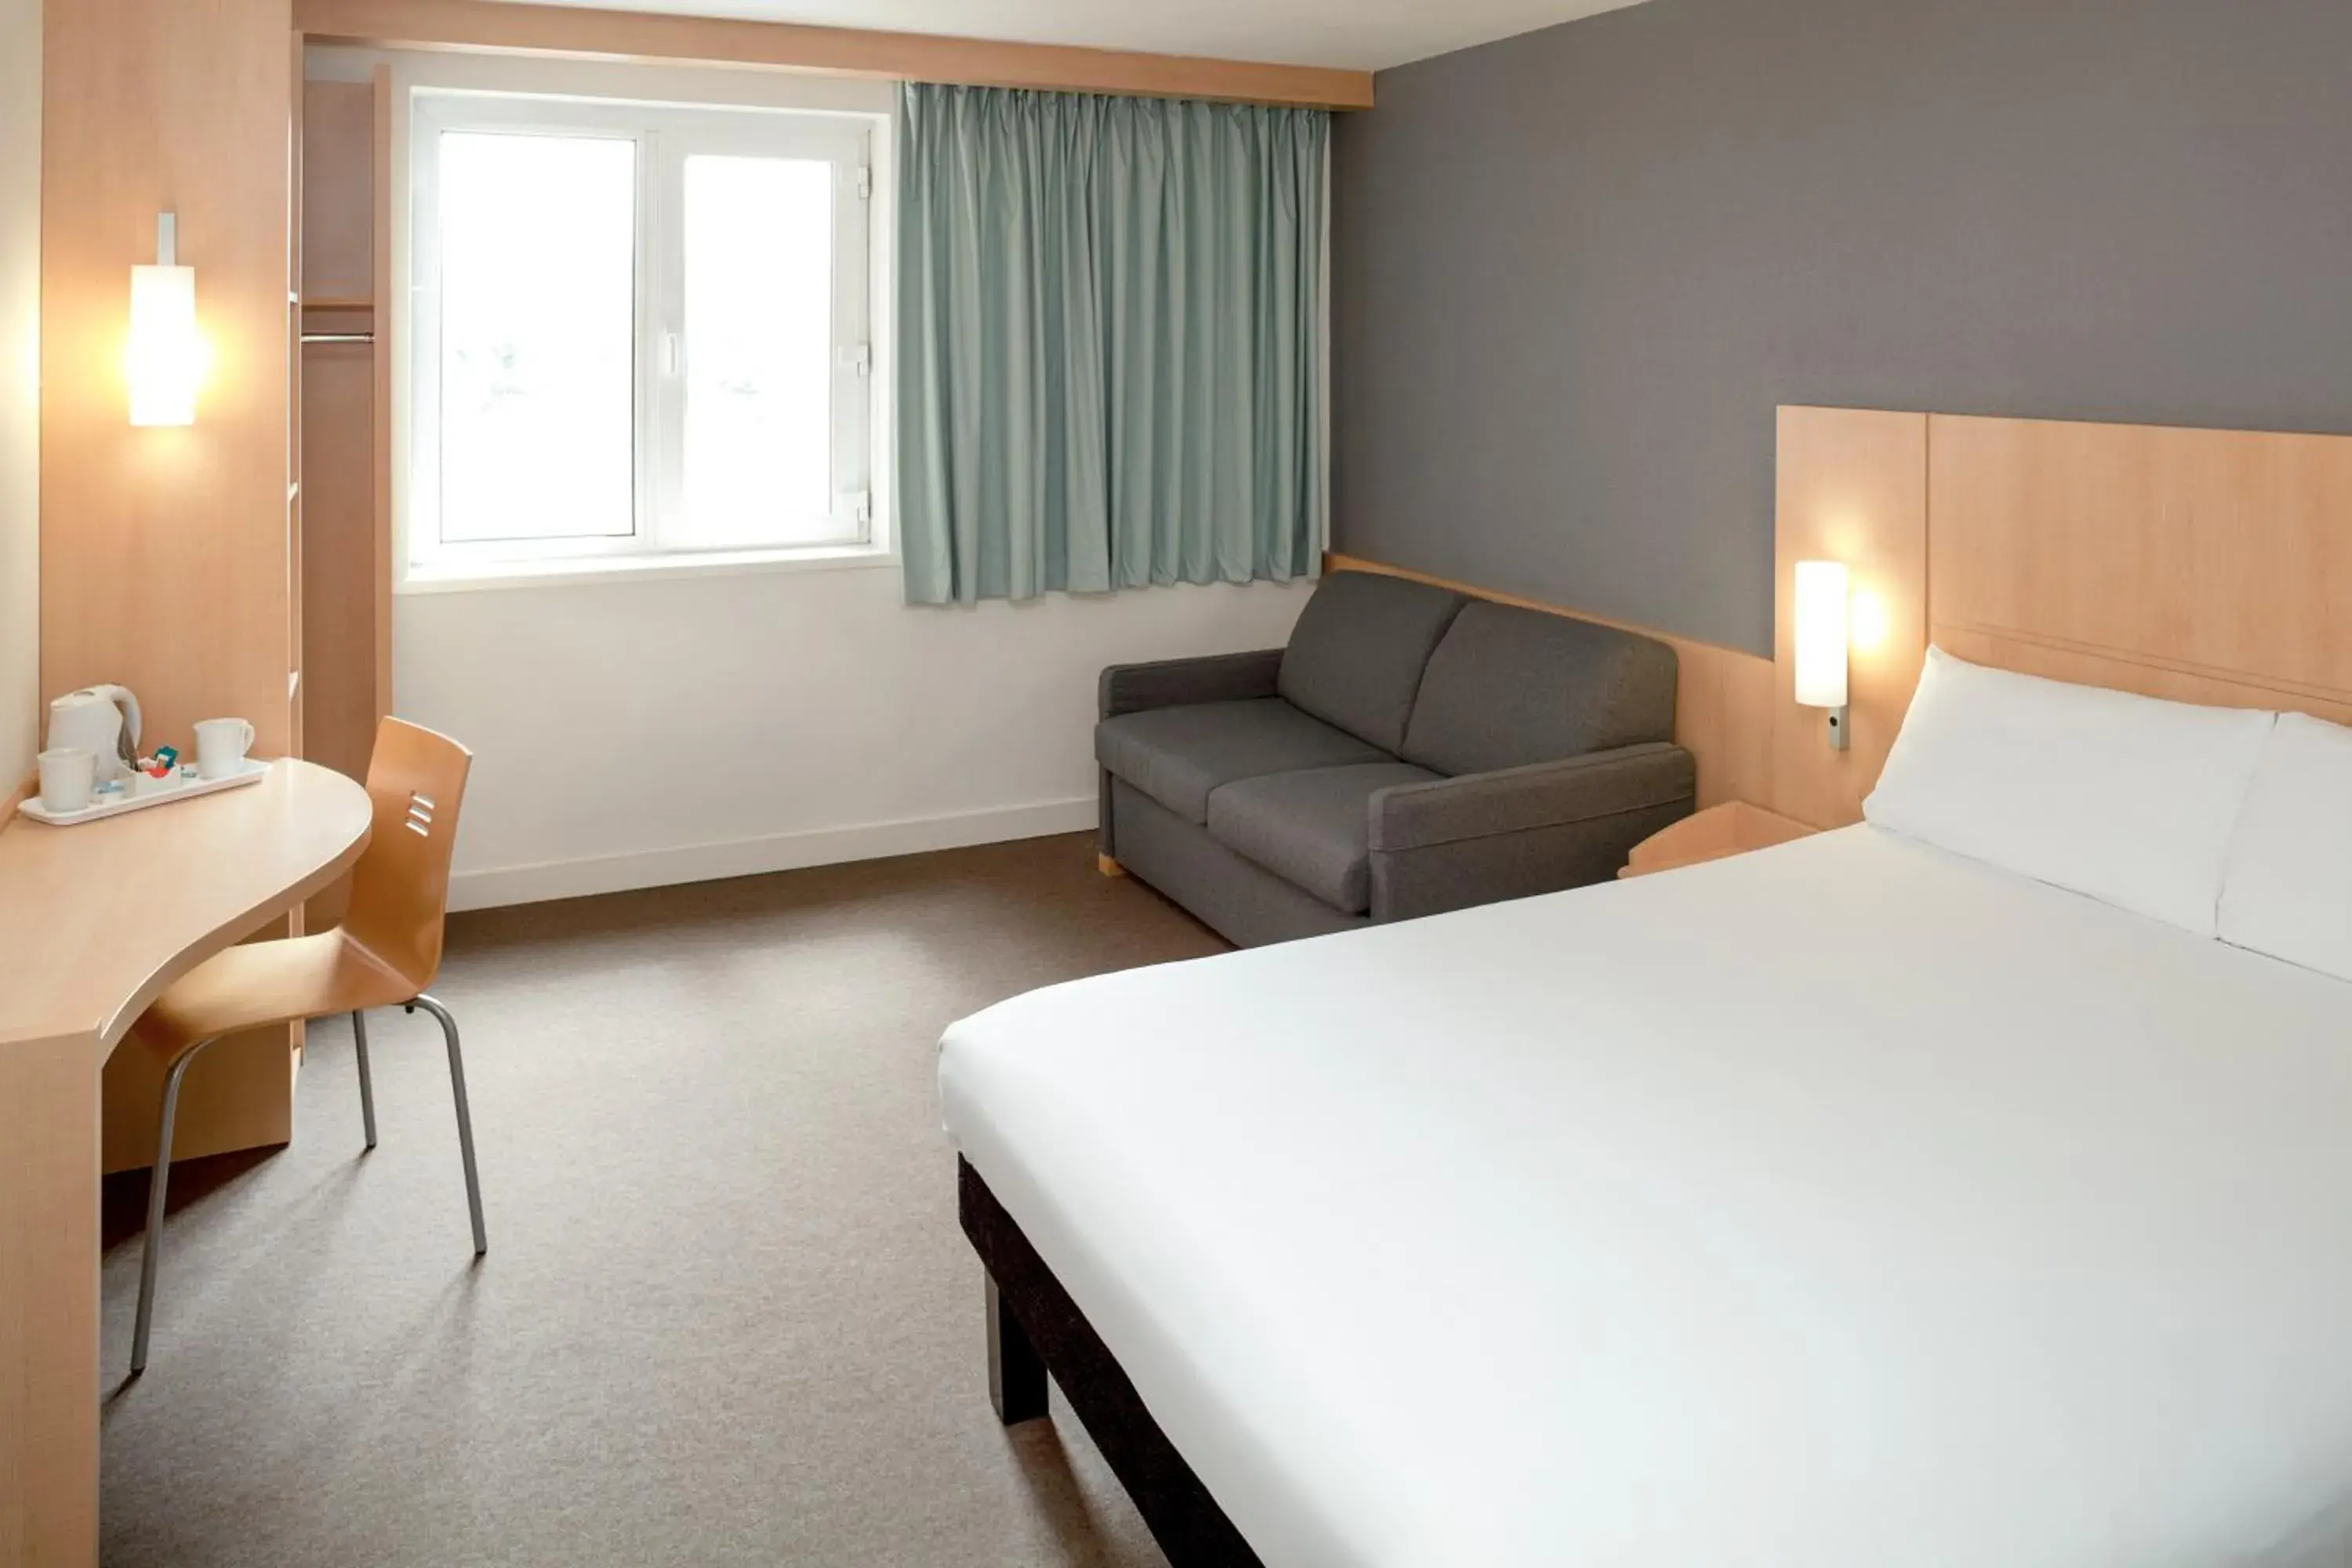 Bed, Room Photo in Ibis Dublin Hotel